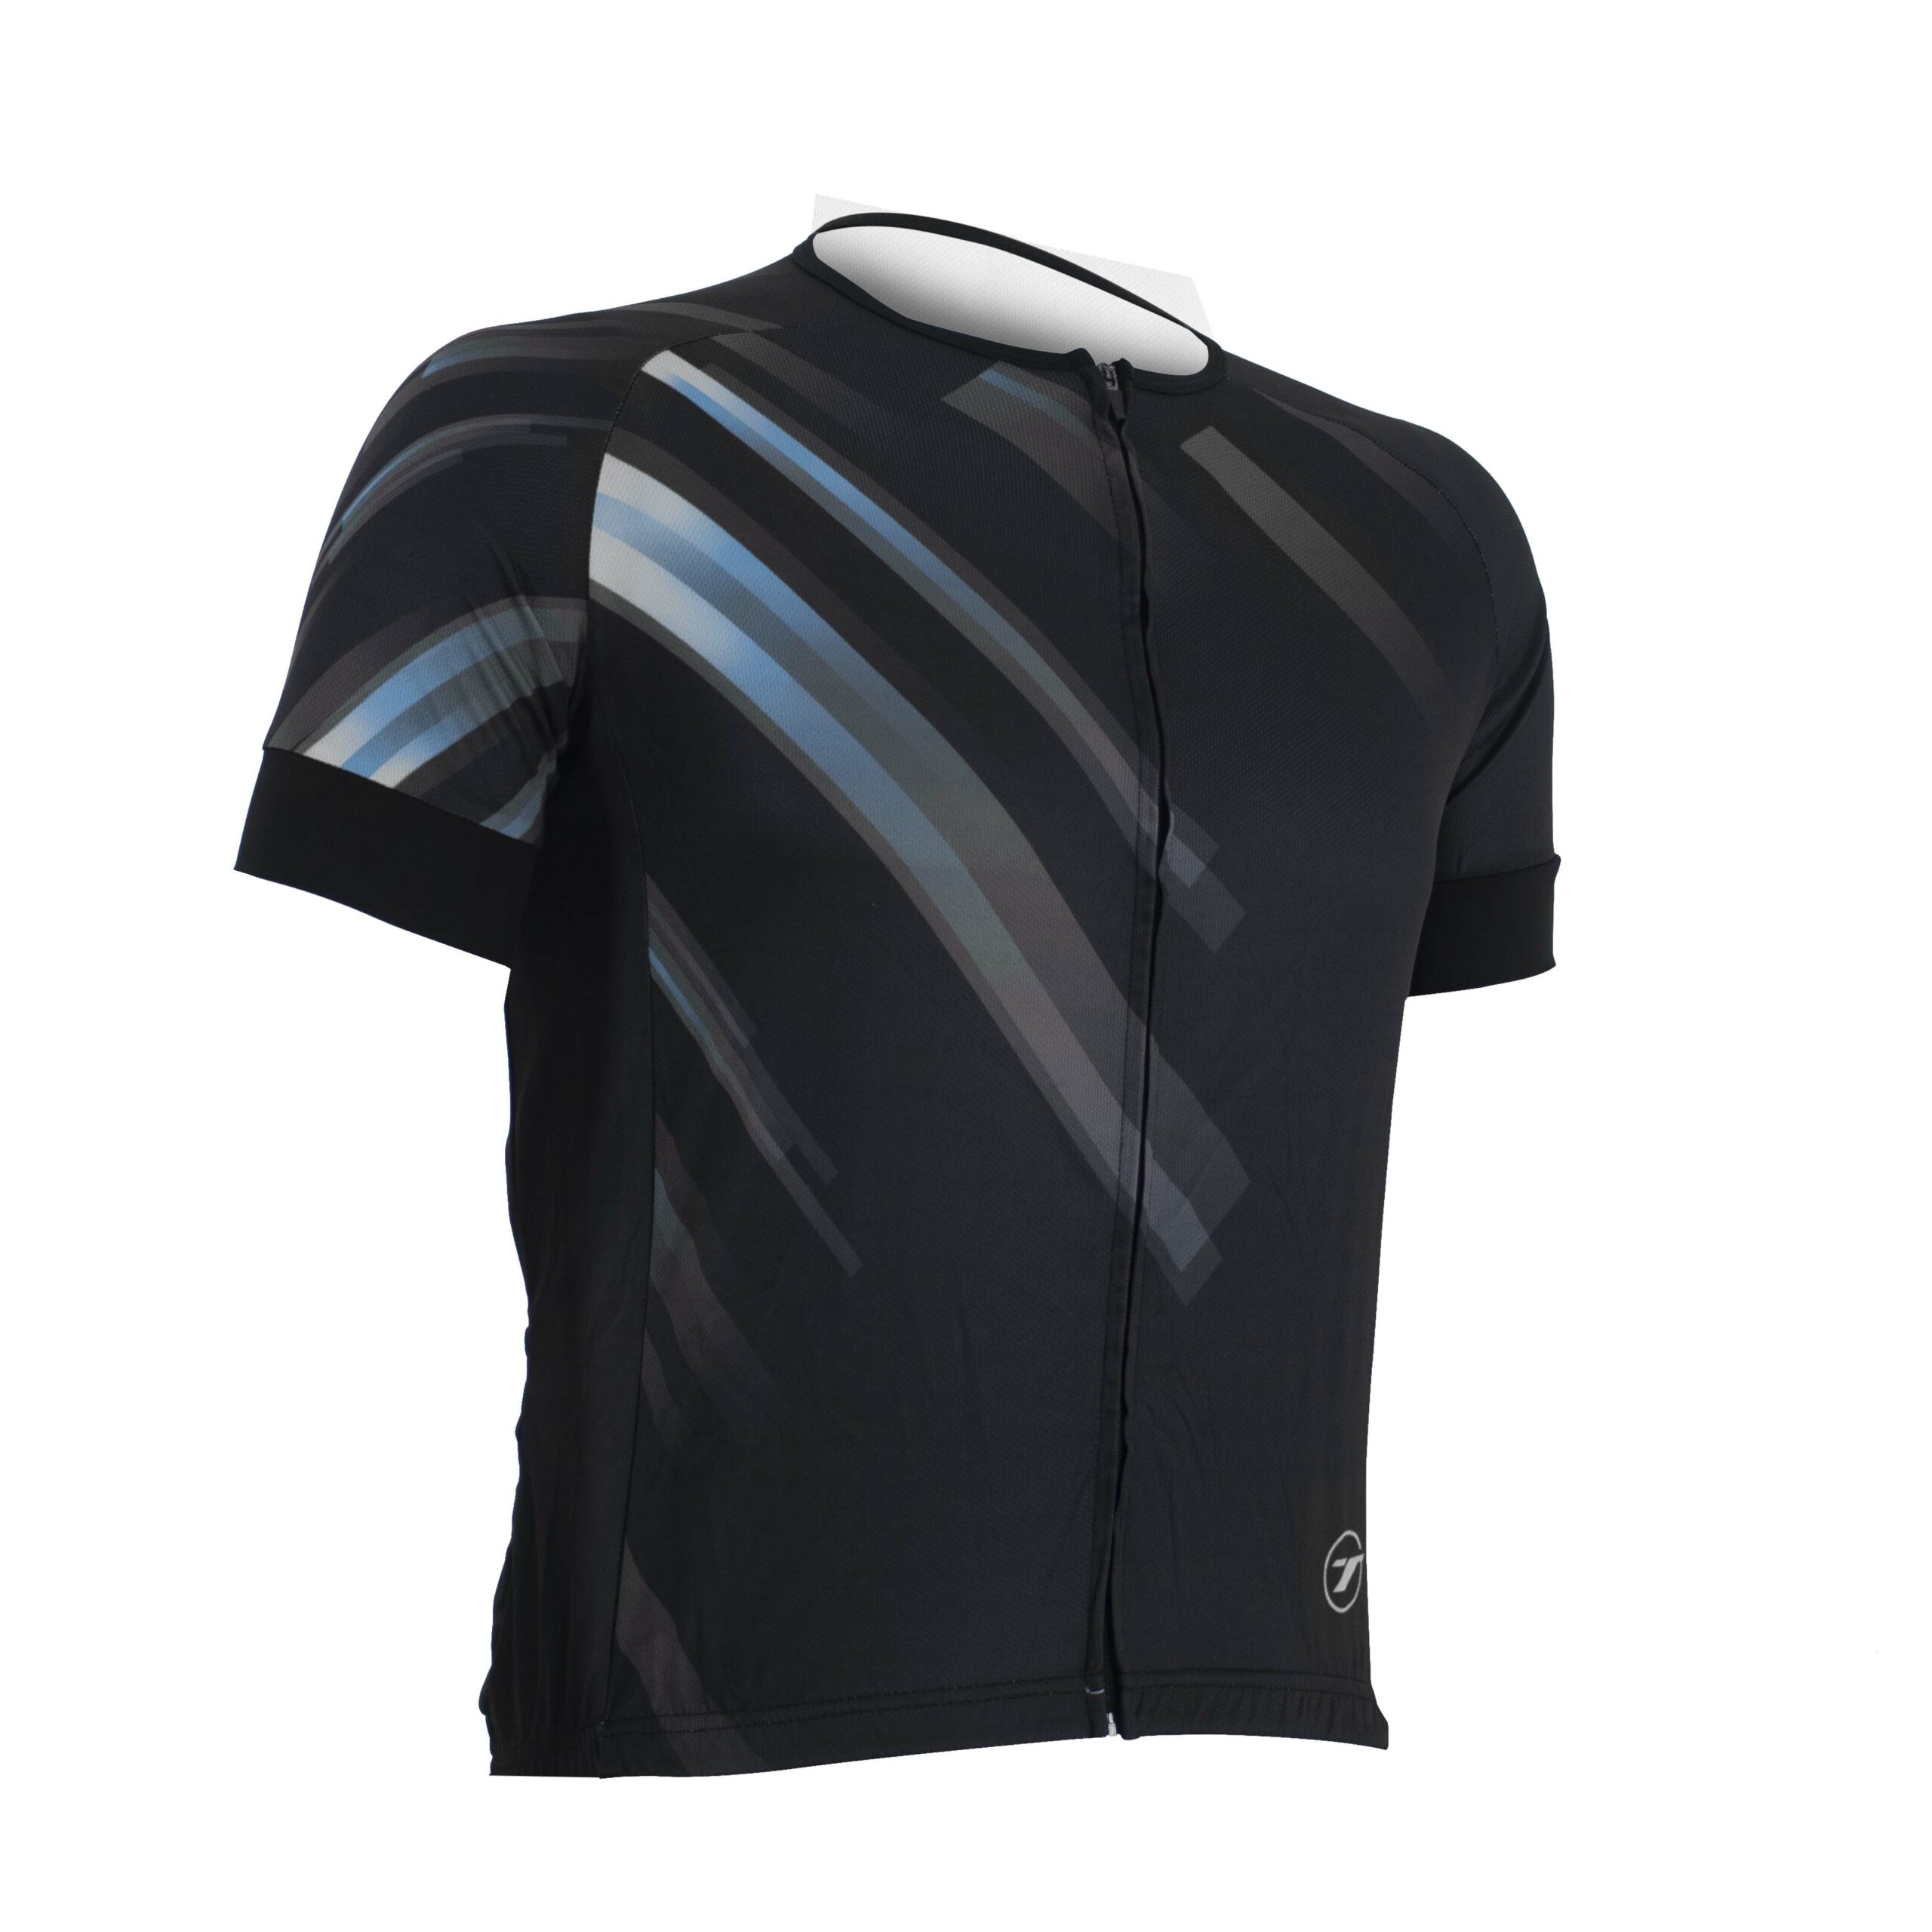 Camisa para ciclismo SUNNY | RIDE LINE - Preto/Cinza, M